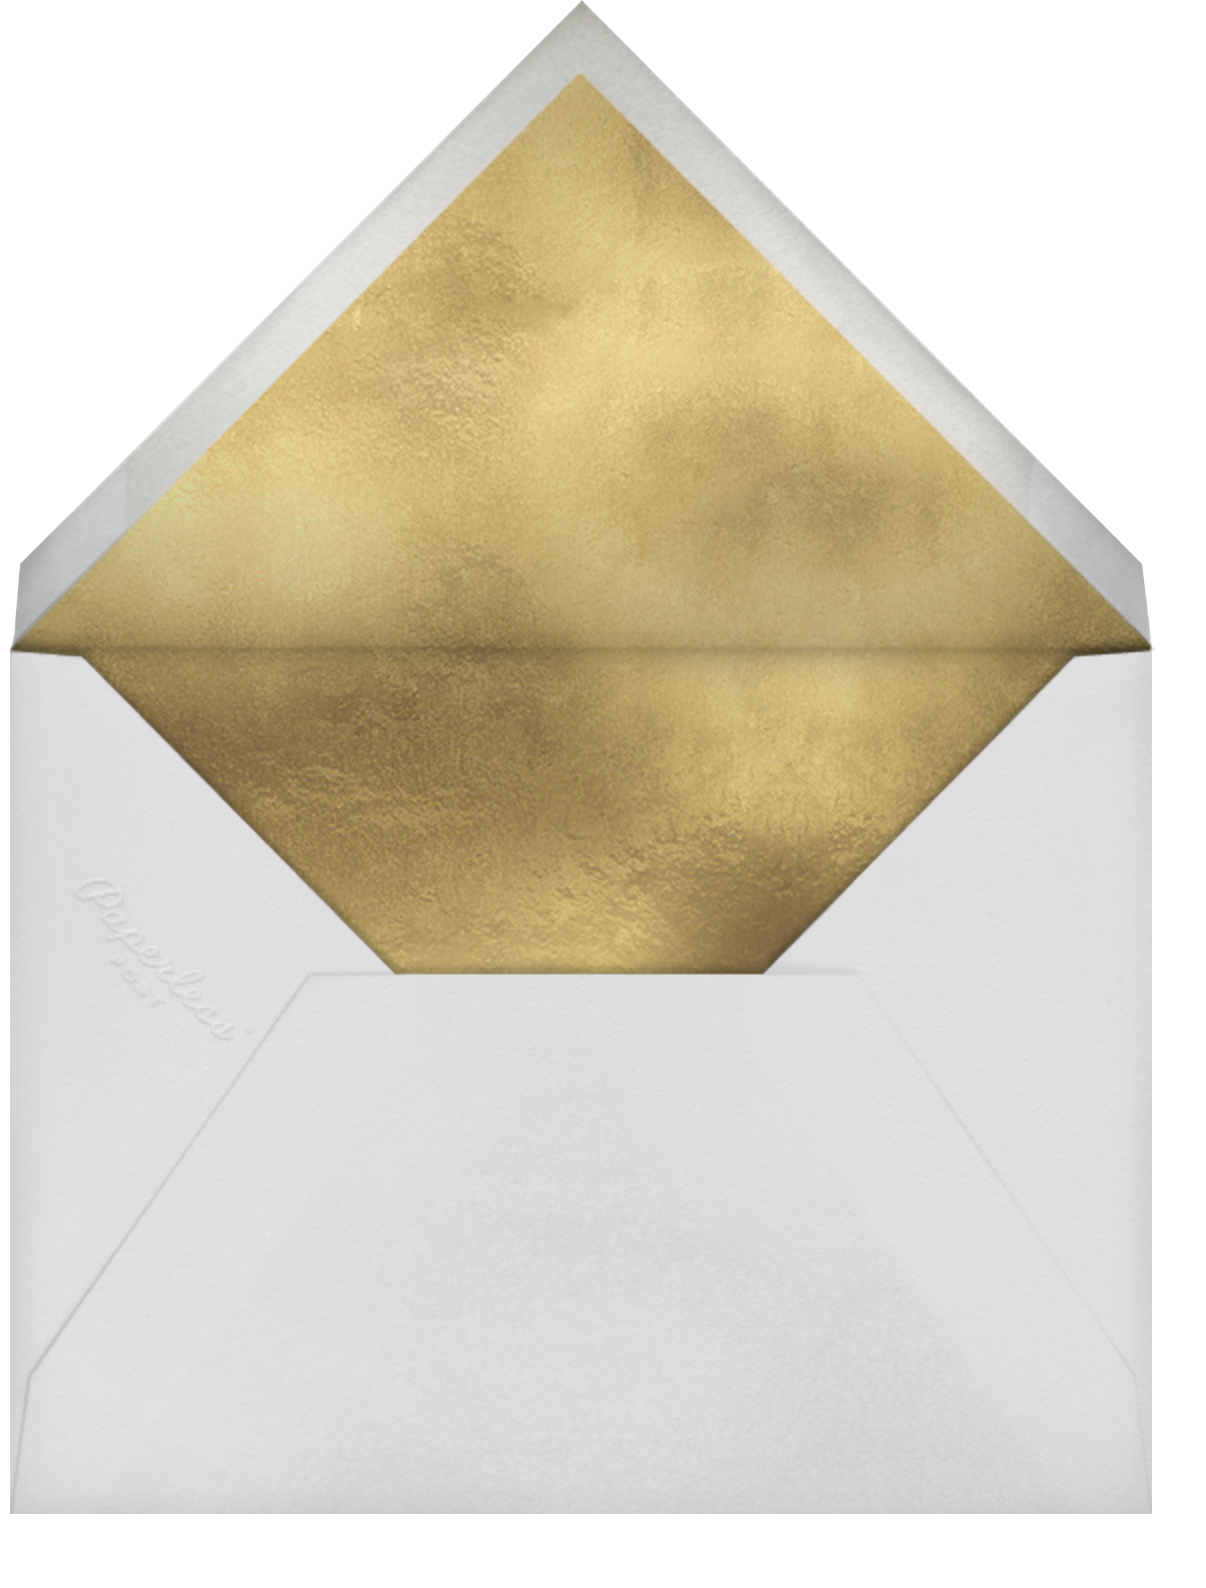 Octagons - Blue/Gold - Paperless Post - Envelope